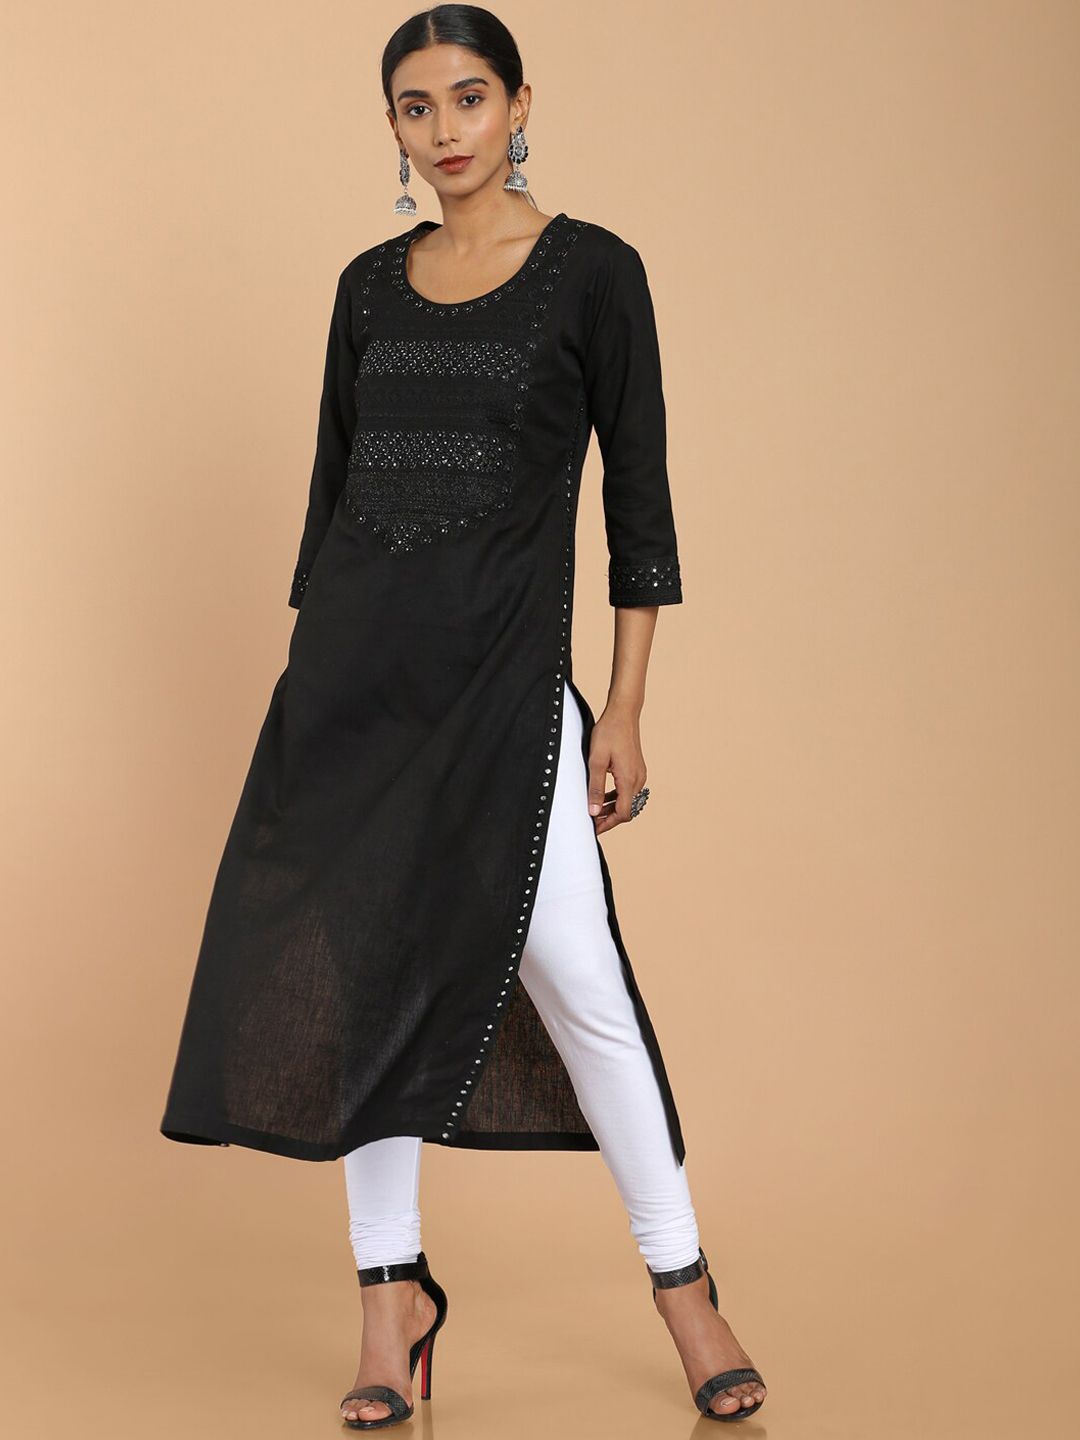 Soch Black Mirror Embellished Cotton Kurta Price in India